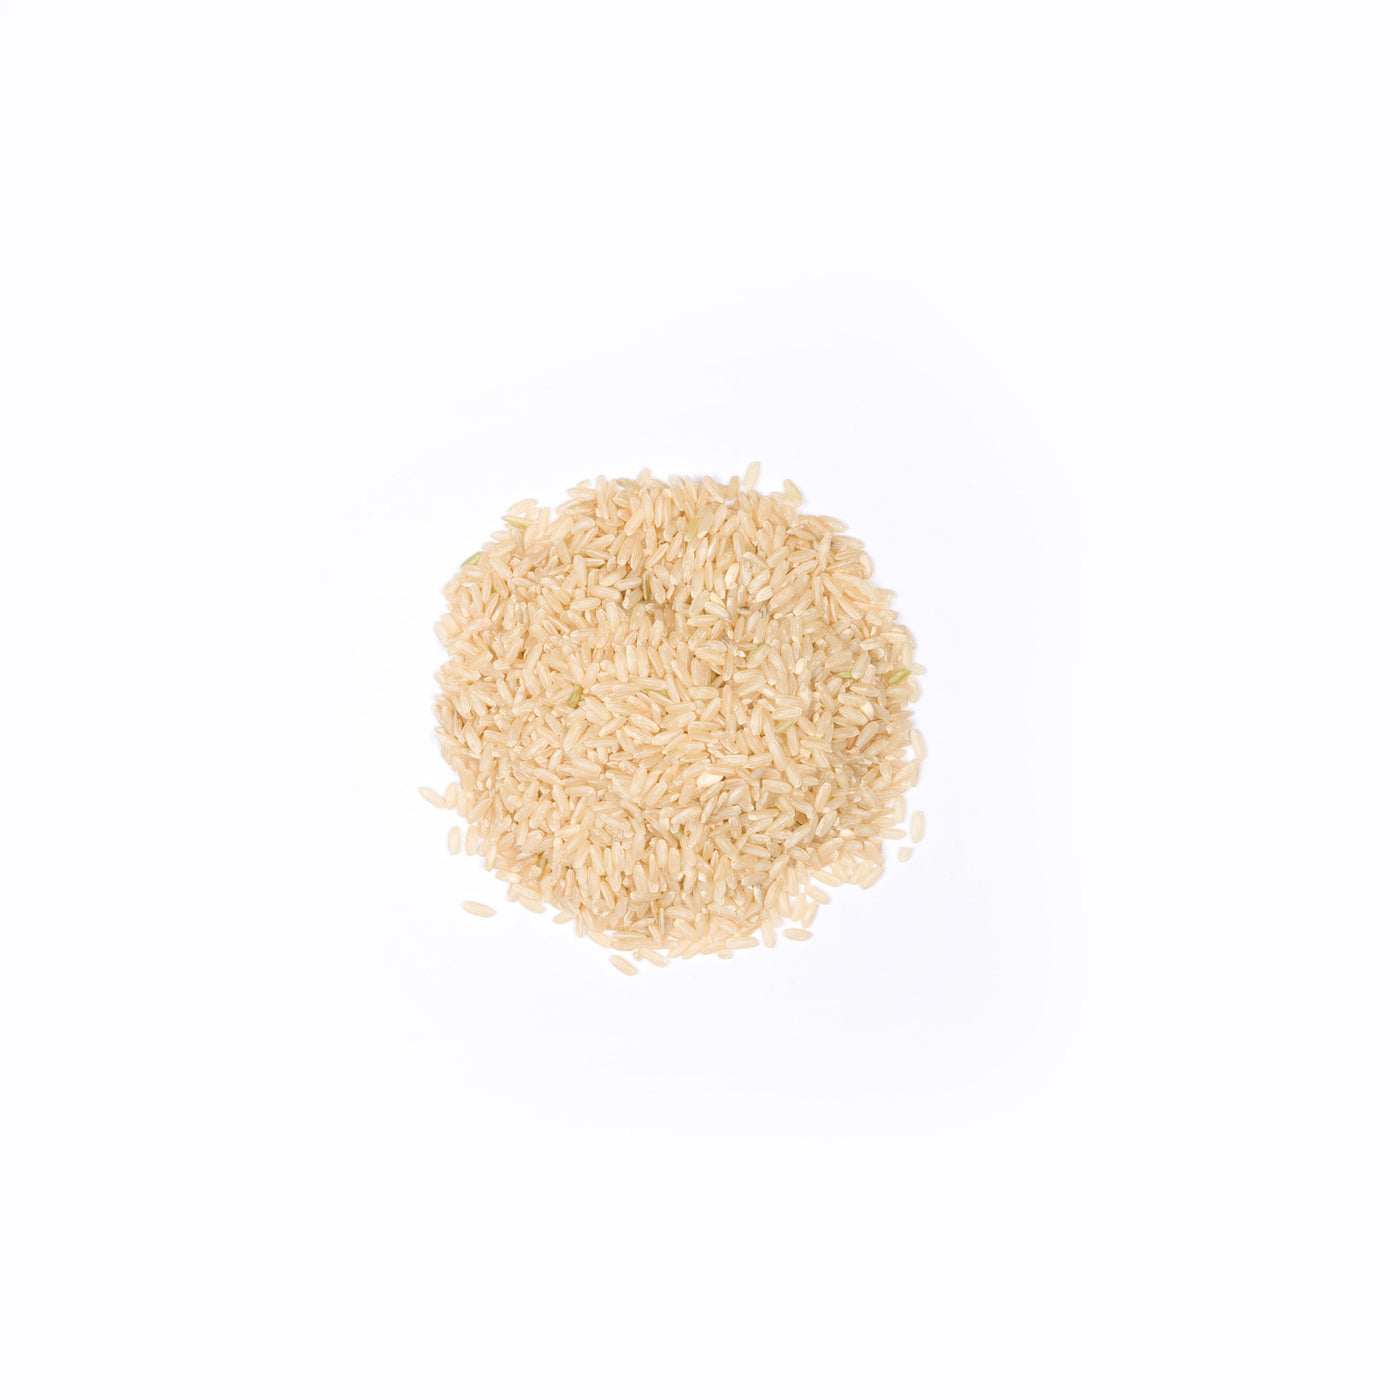 White brown rice